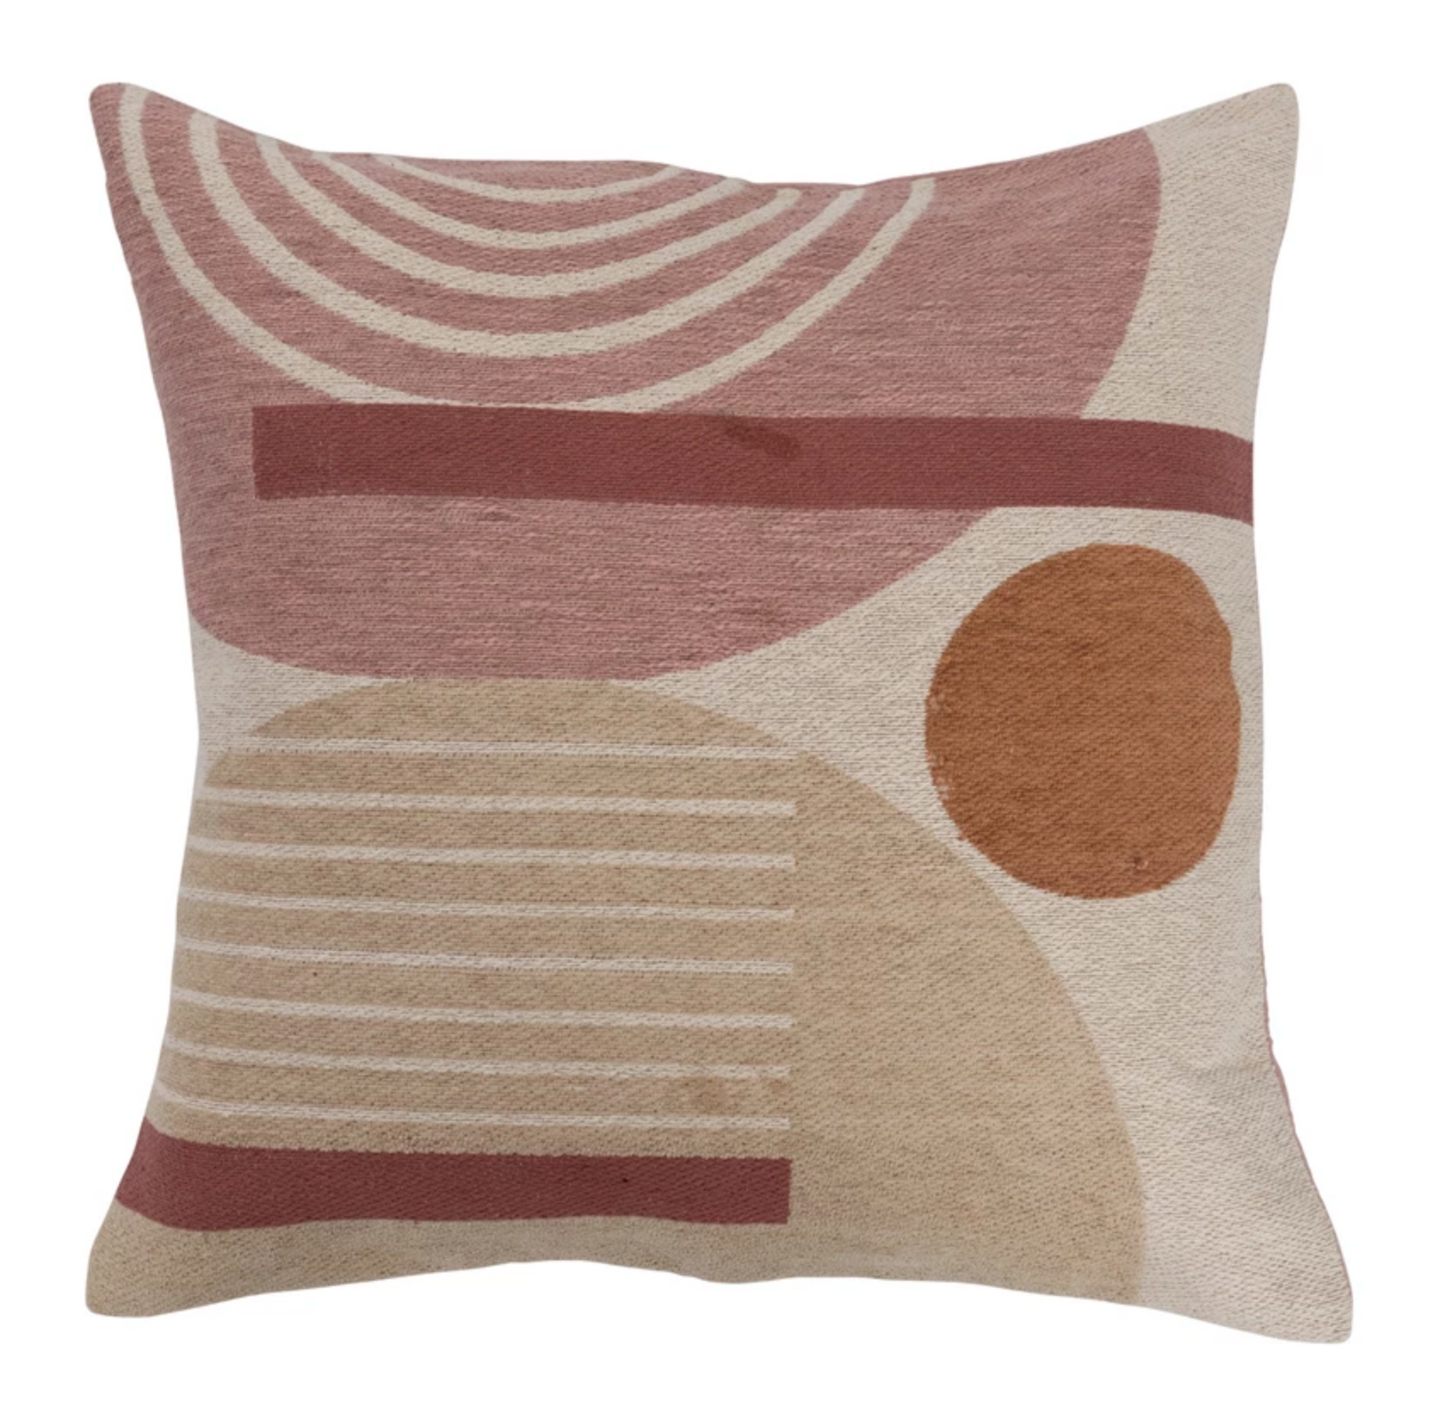 Simplicity Woven Cotton Blend Pillow w/ Abstract Design